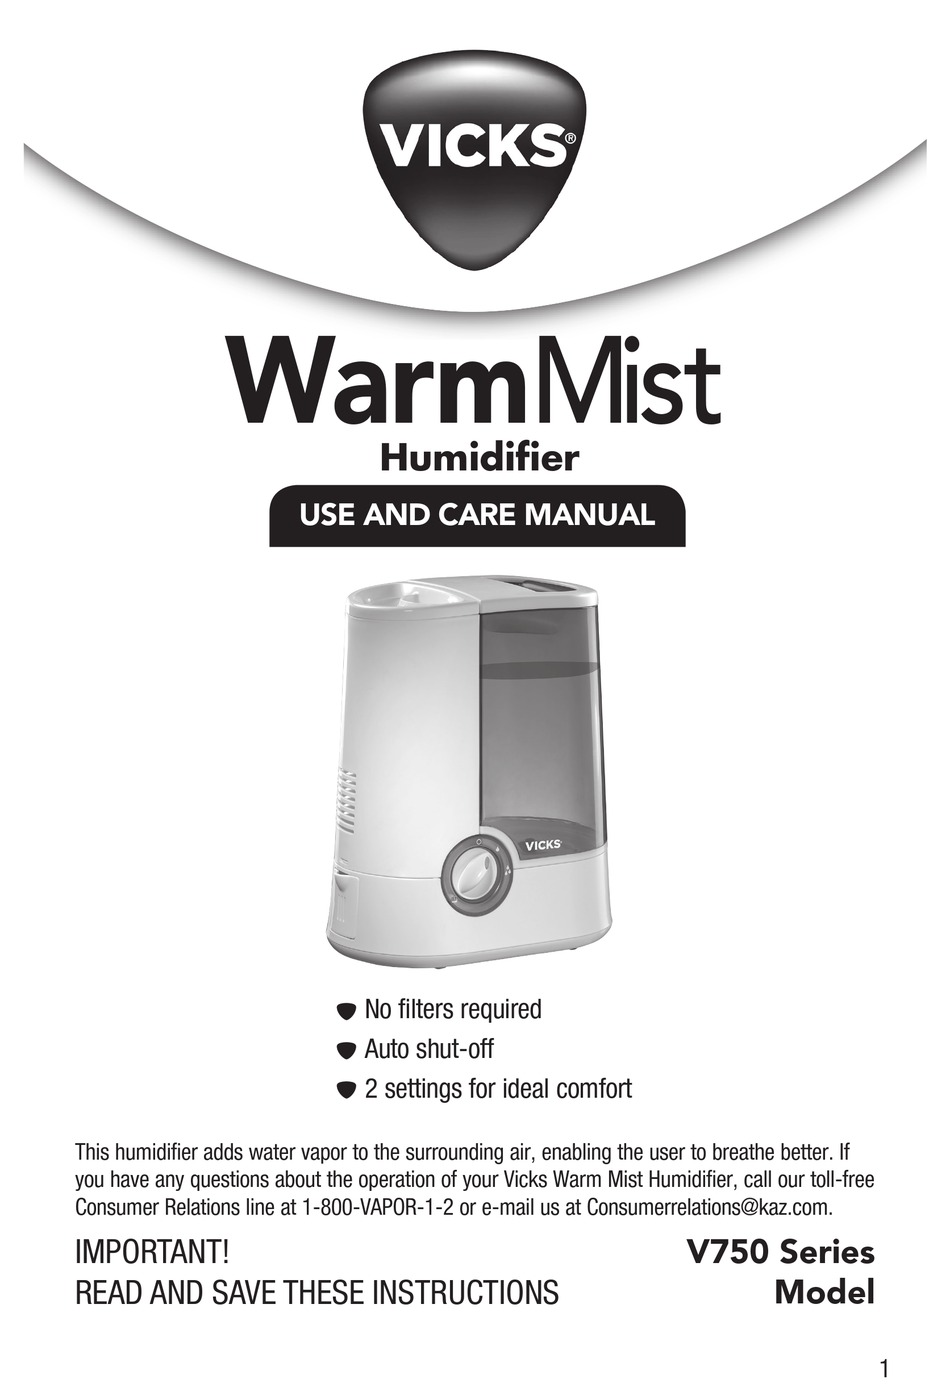 VICKS WARMMIST USE AND CARE MANUAL Pdf Download | ManualsLib